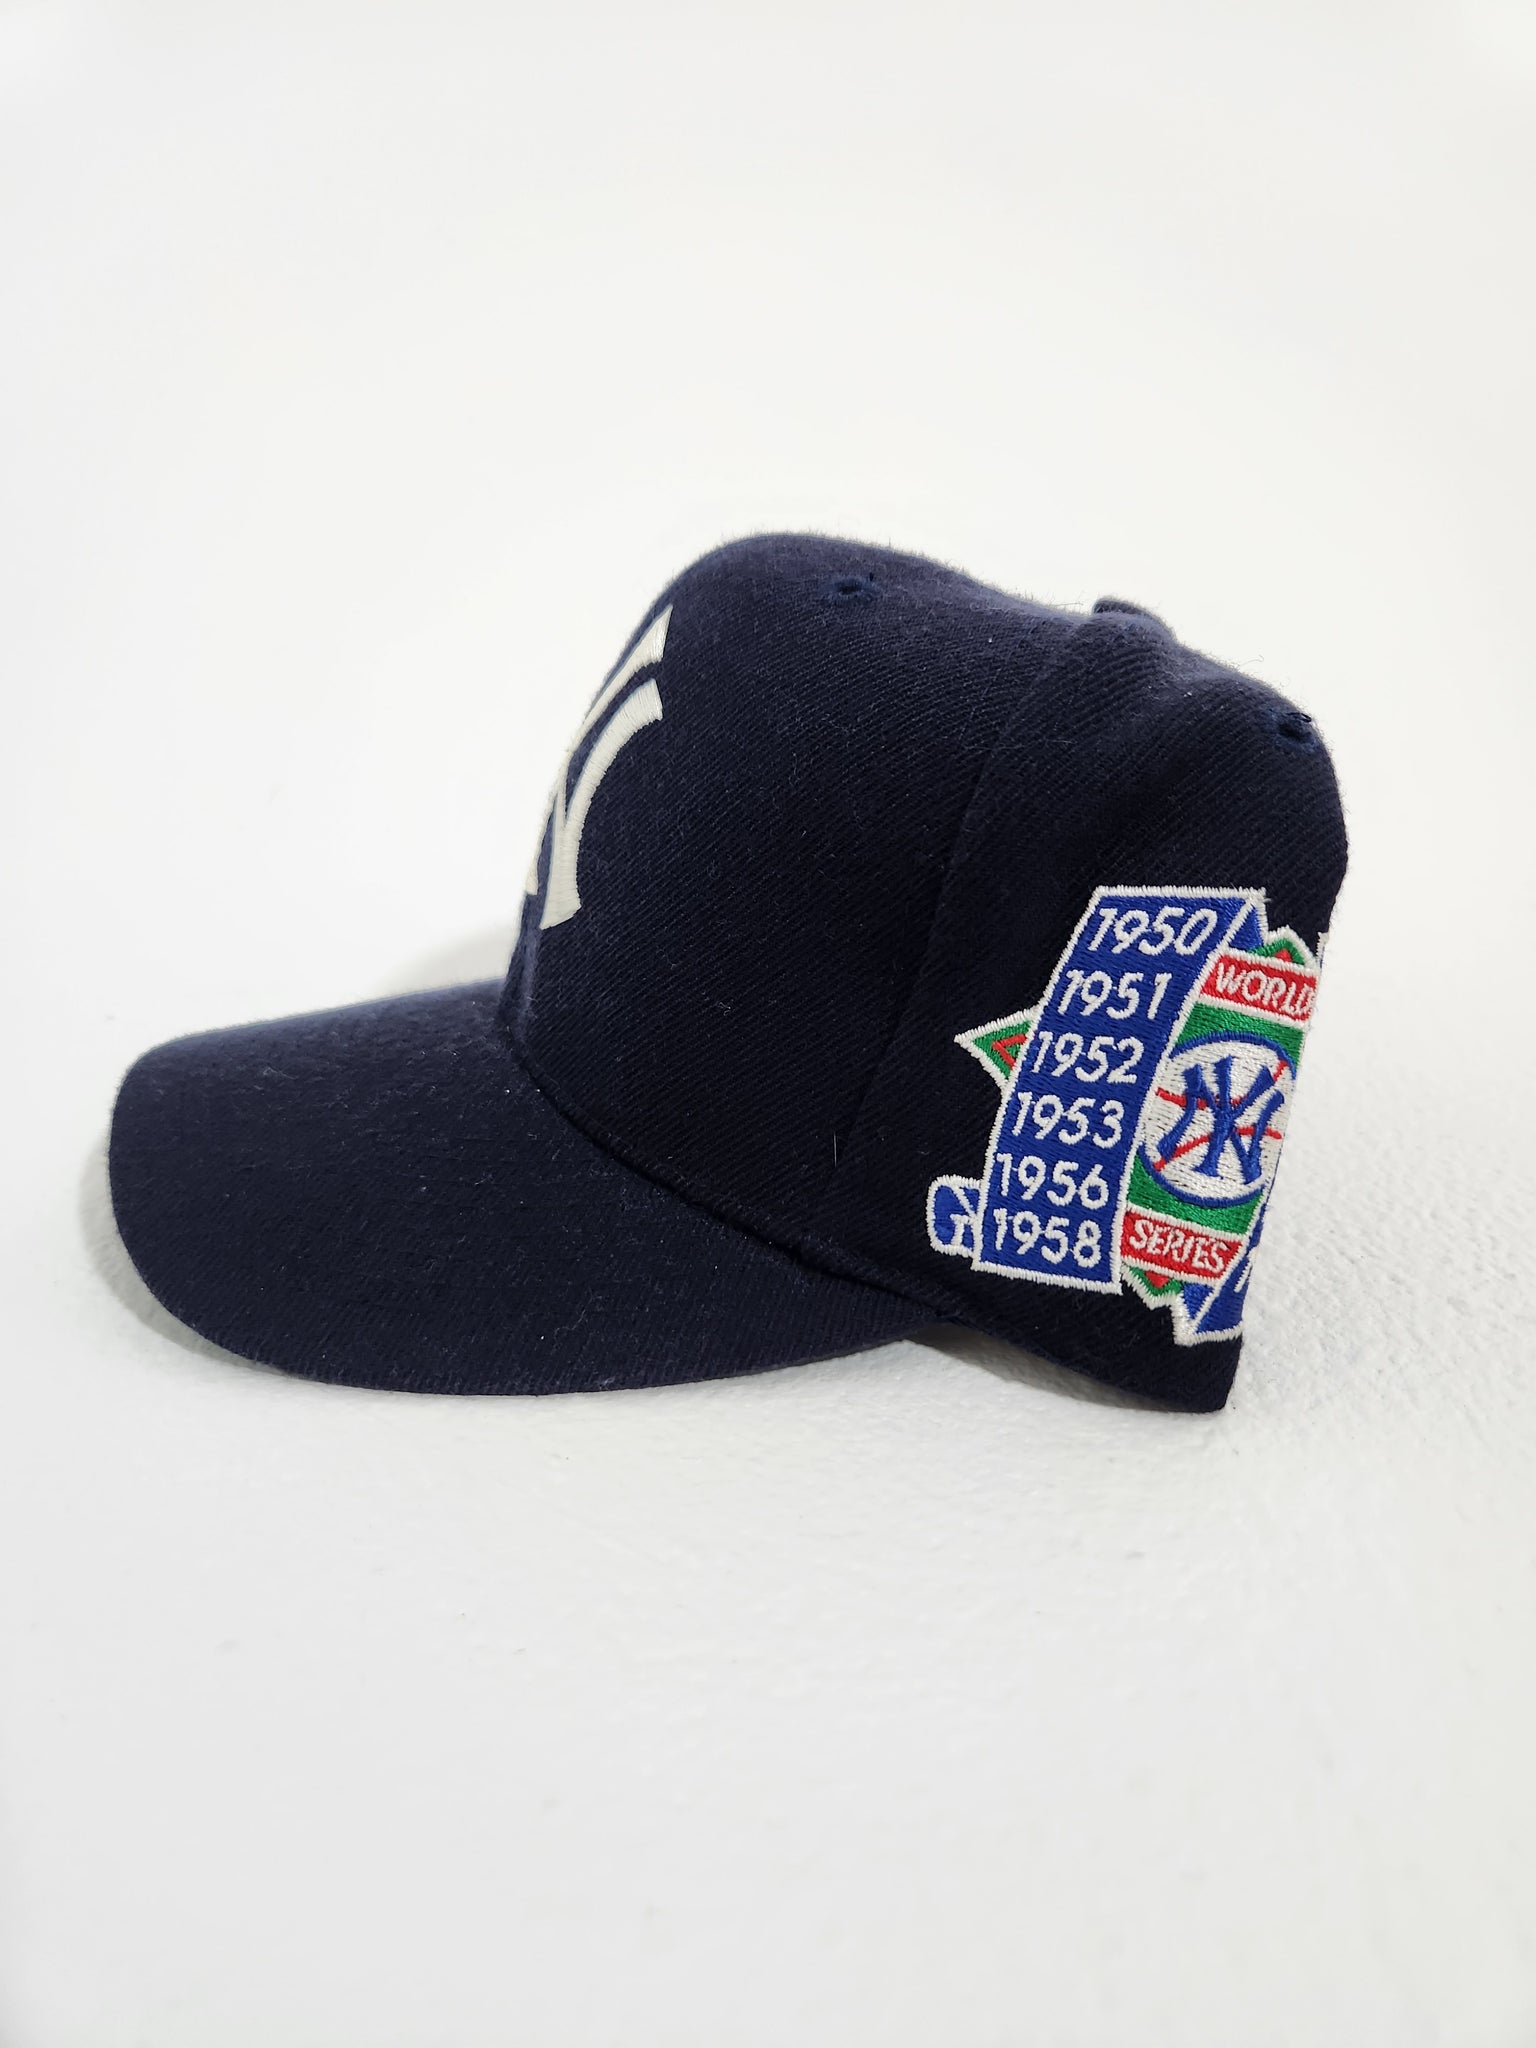 Authentic Mitchell Ness 1950 New York Yankees World Series Jacket